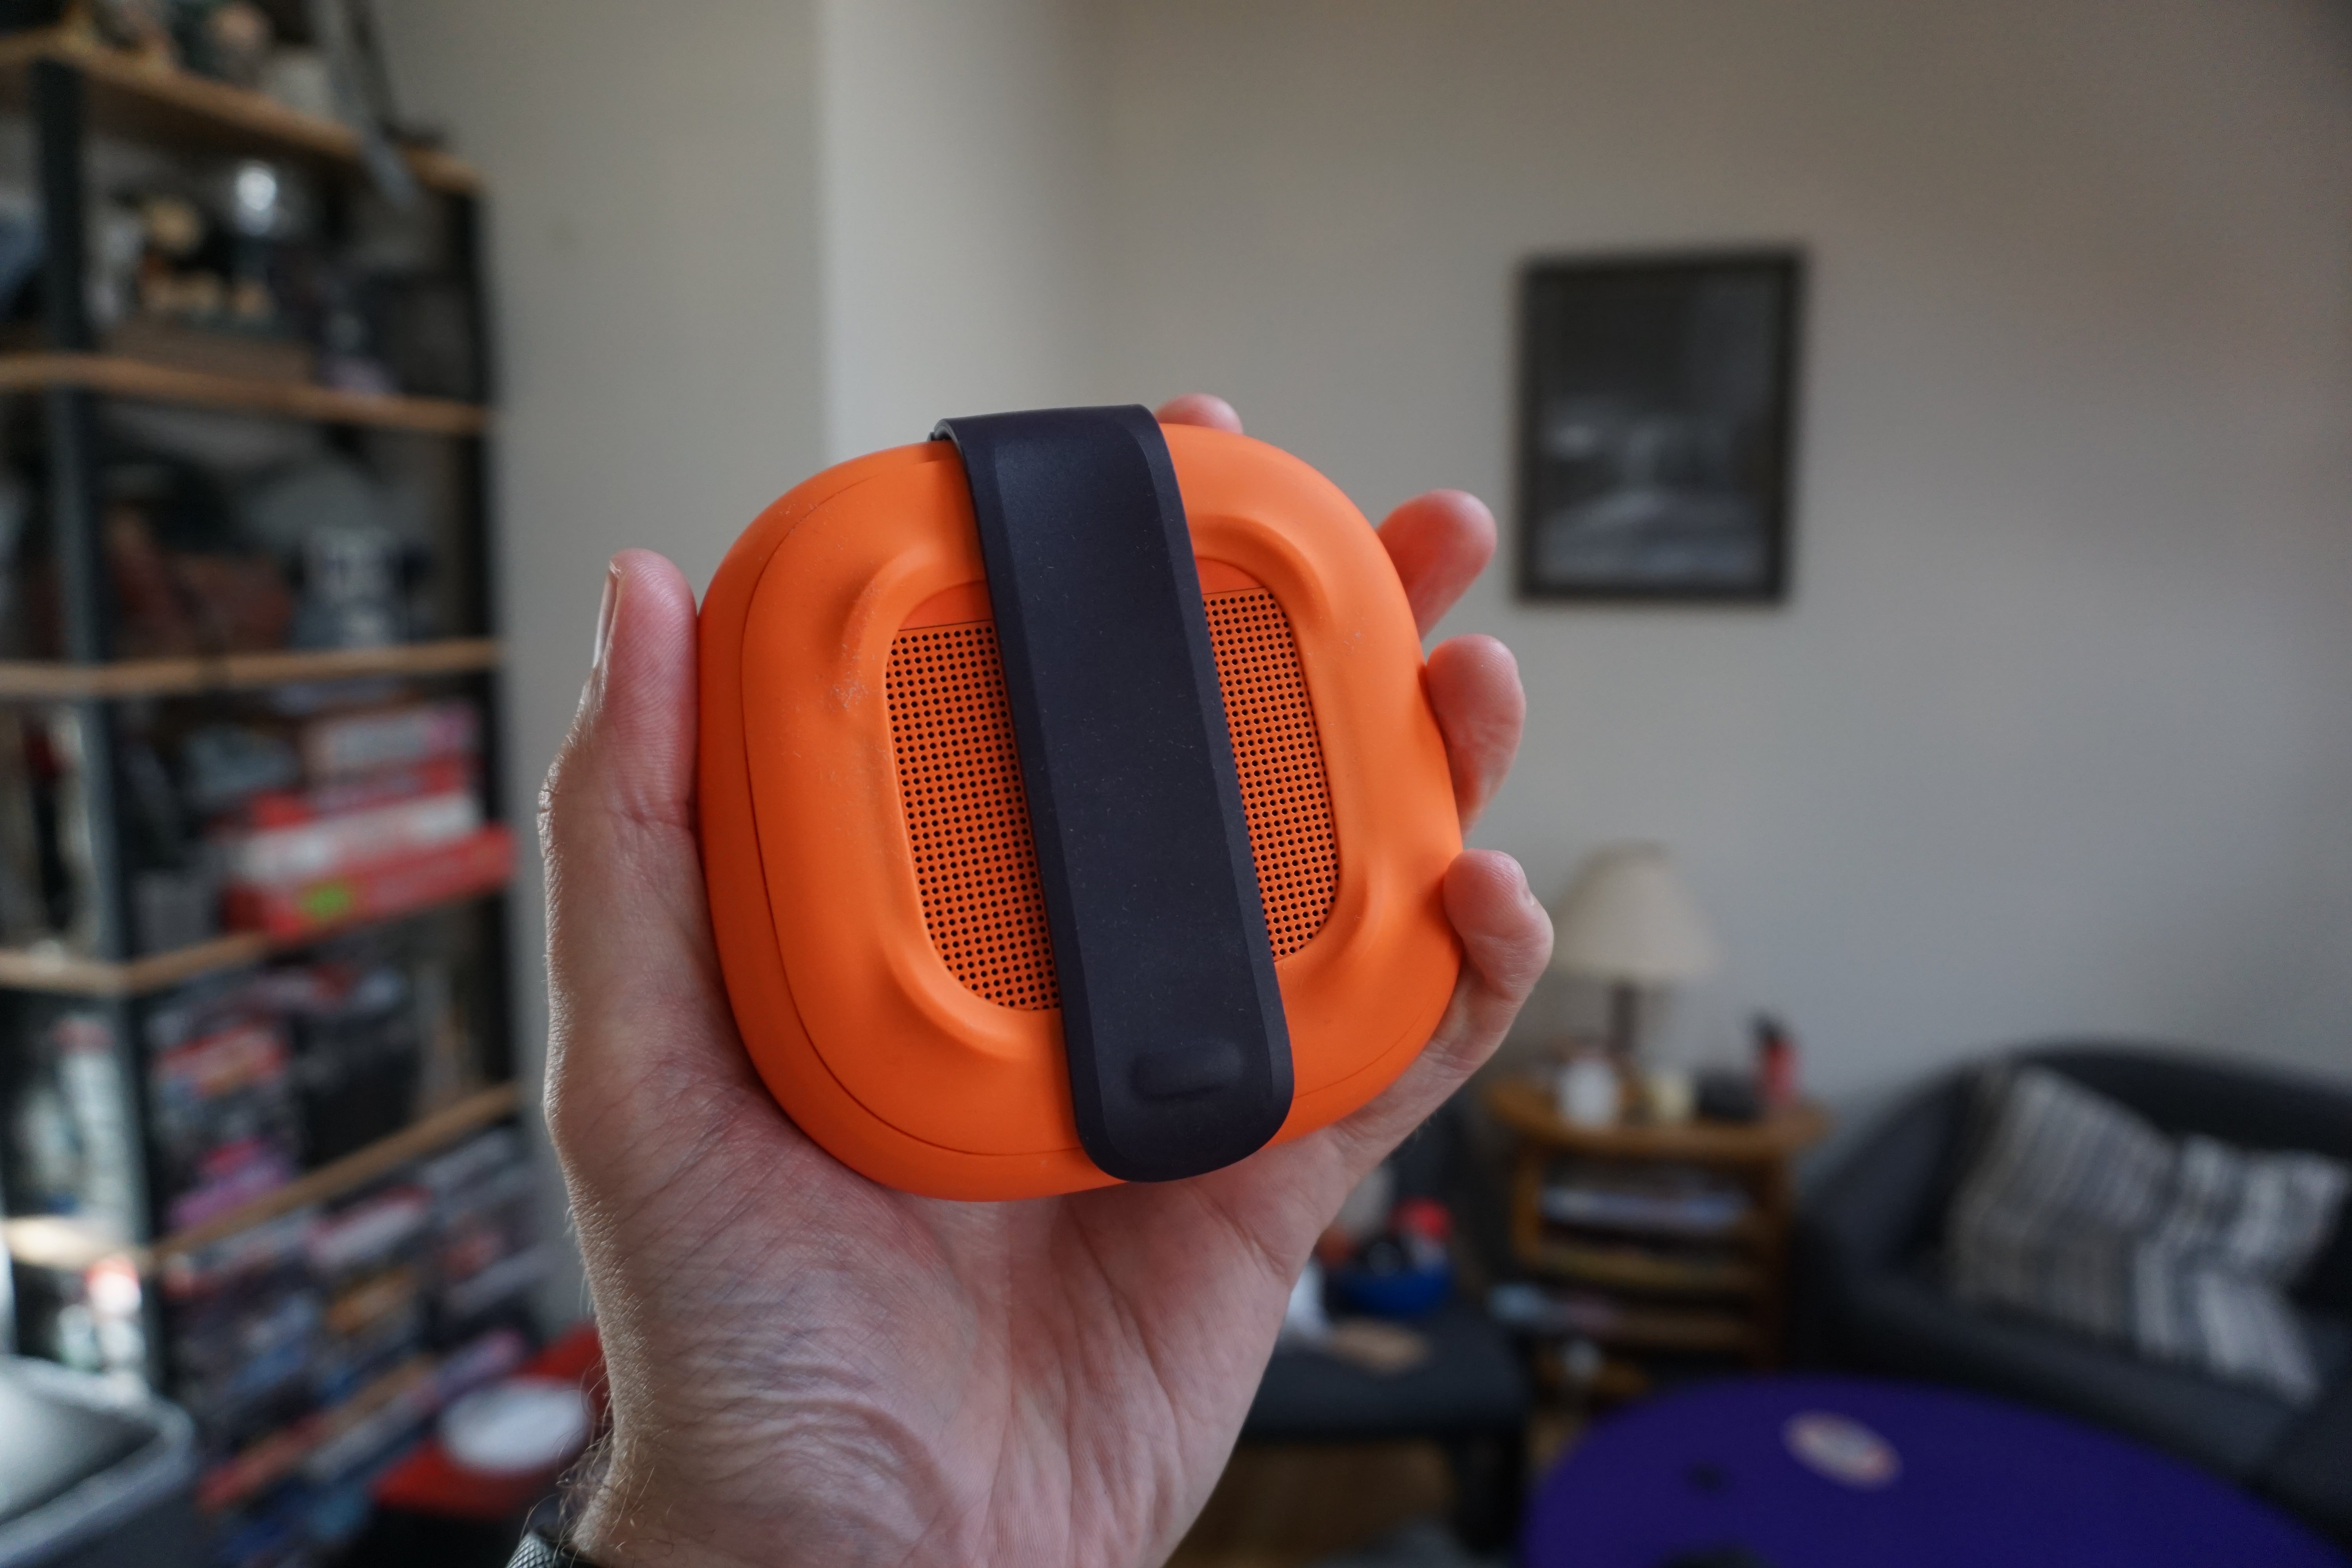 Hand holding an orange Bose SoundLink Micro speaker.